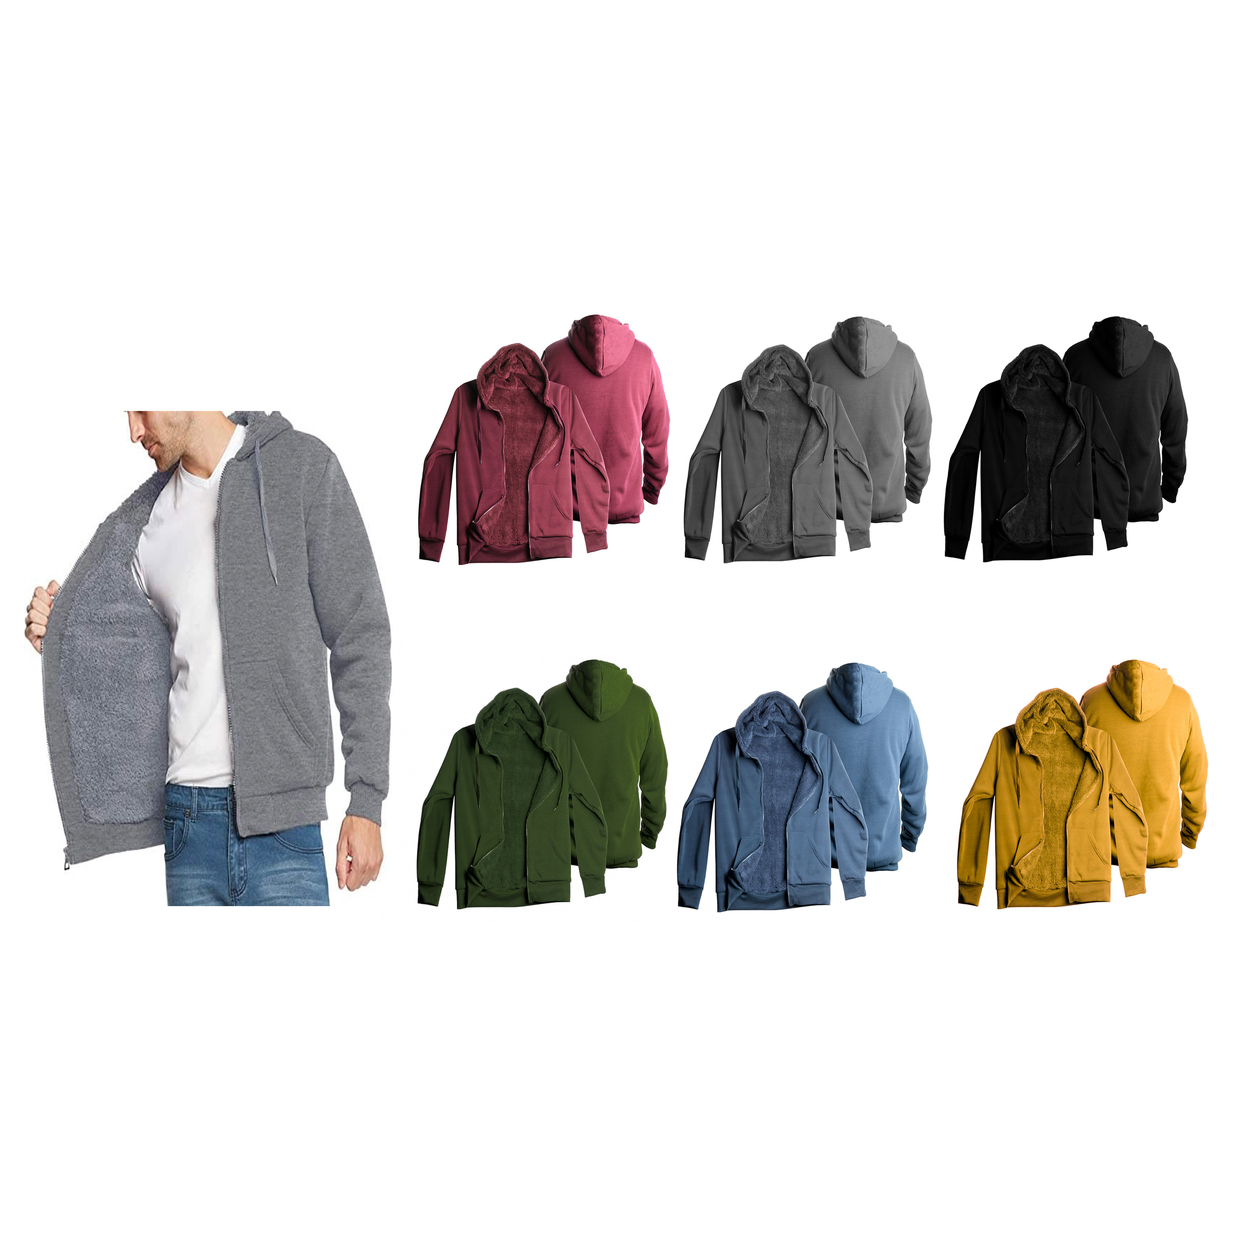 Men's Big & Tall Heavyweight Soft Sherpa Lined Fleece Zip-Up Hoodie Sweater Jacket - Burgundy, 1X